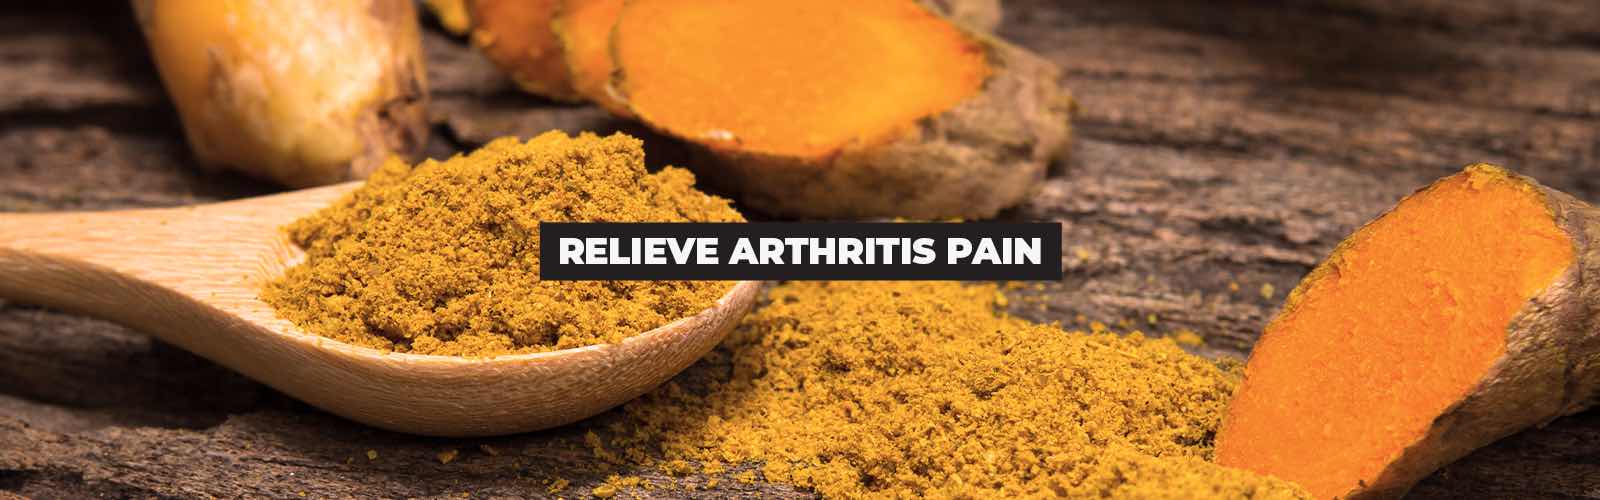 Can Turmeric Relieve Arthritis?